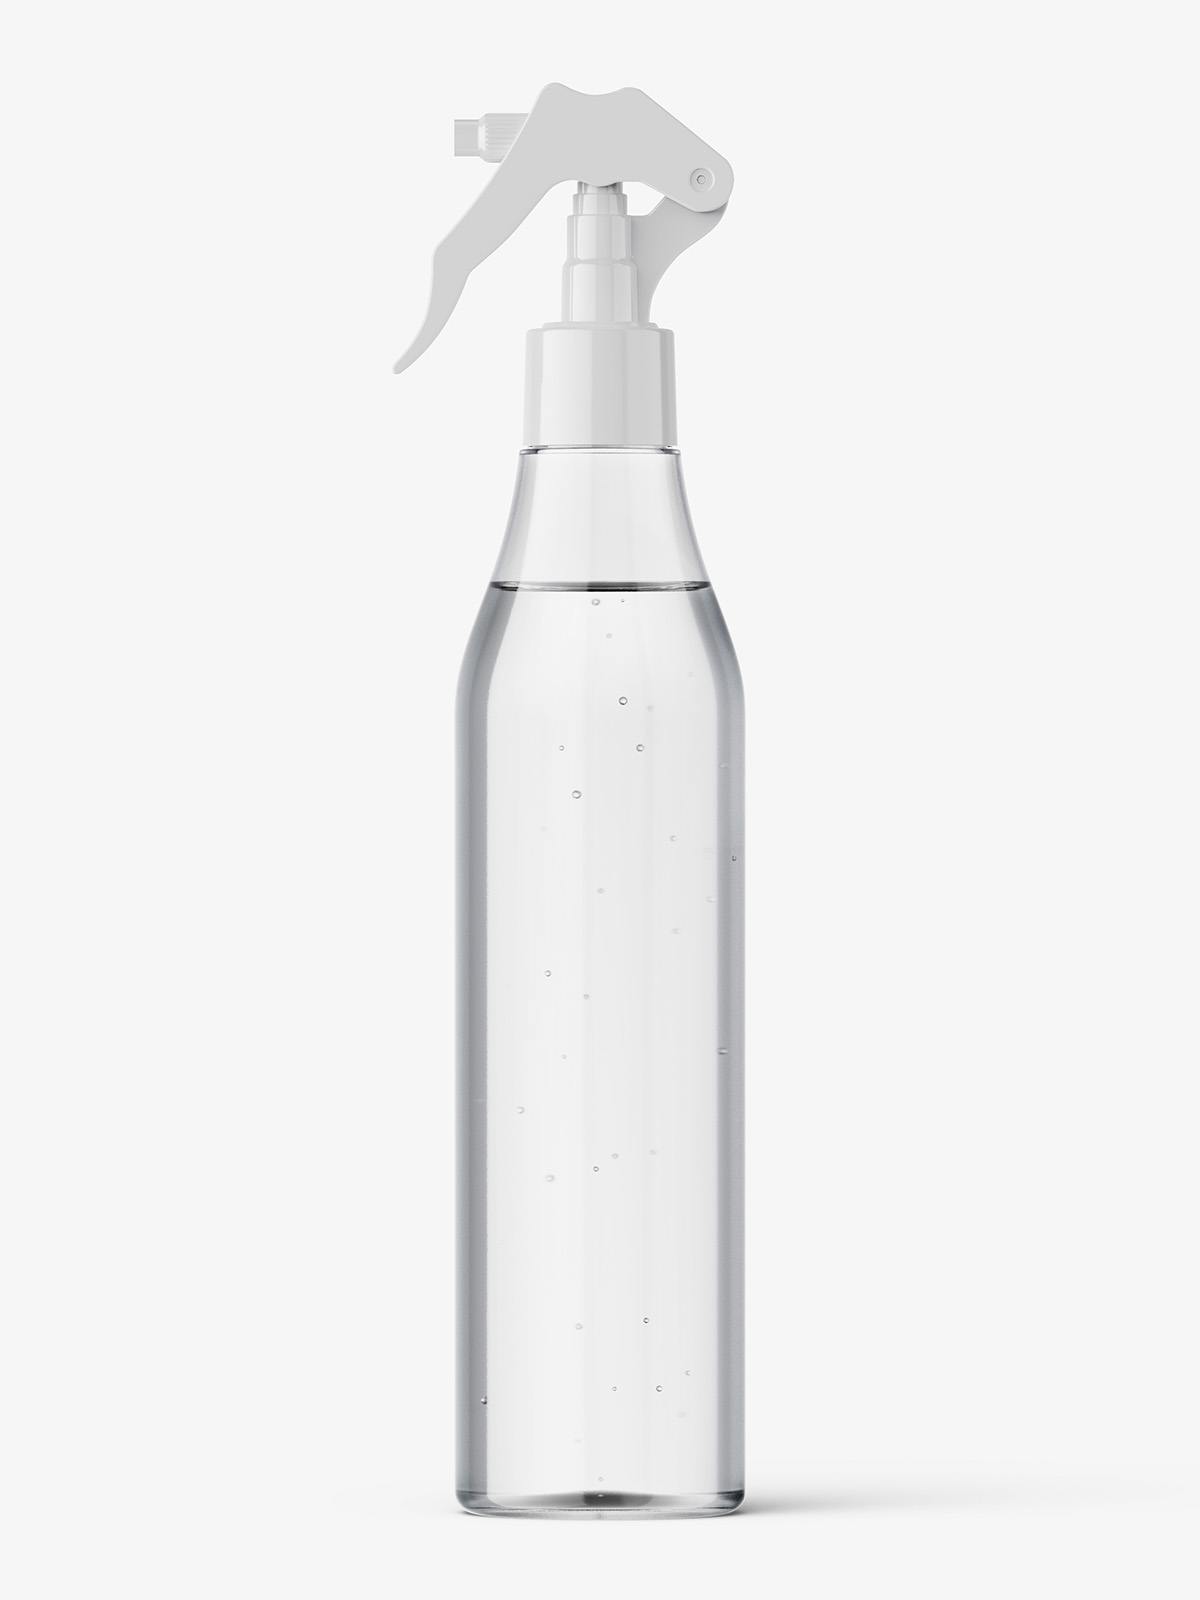 Download Clear bottle mockup with trigger spray mockup - Smarty Mockups